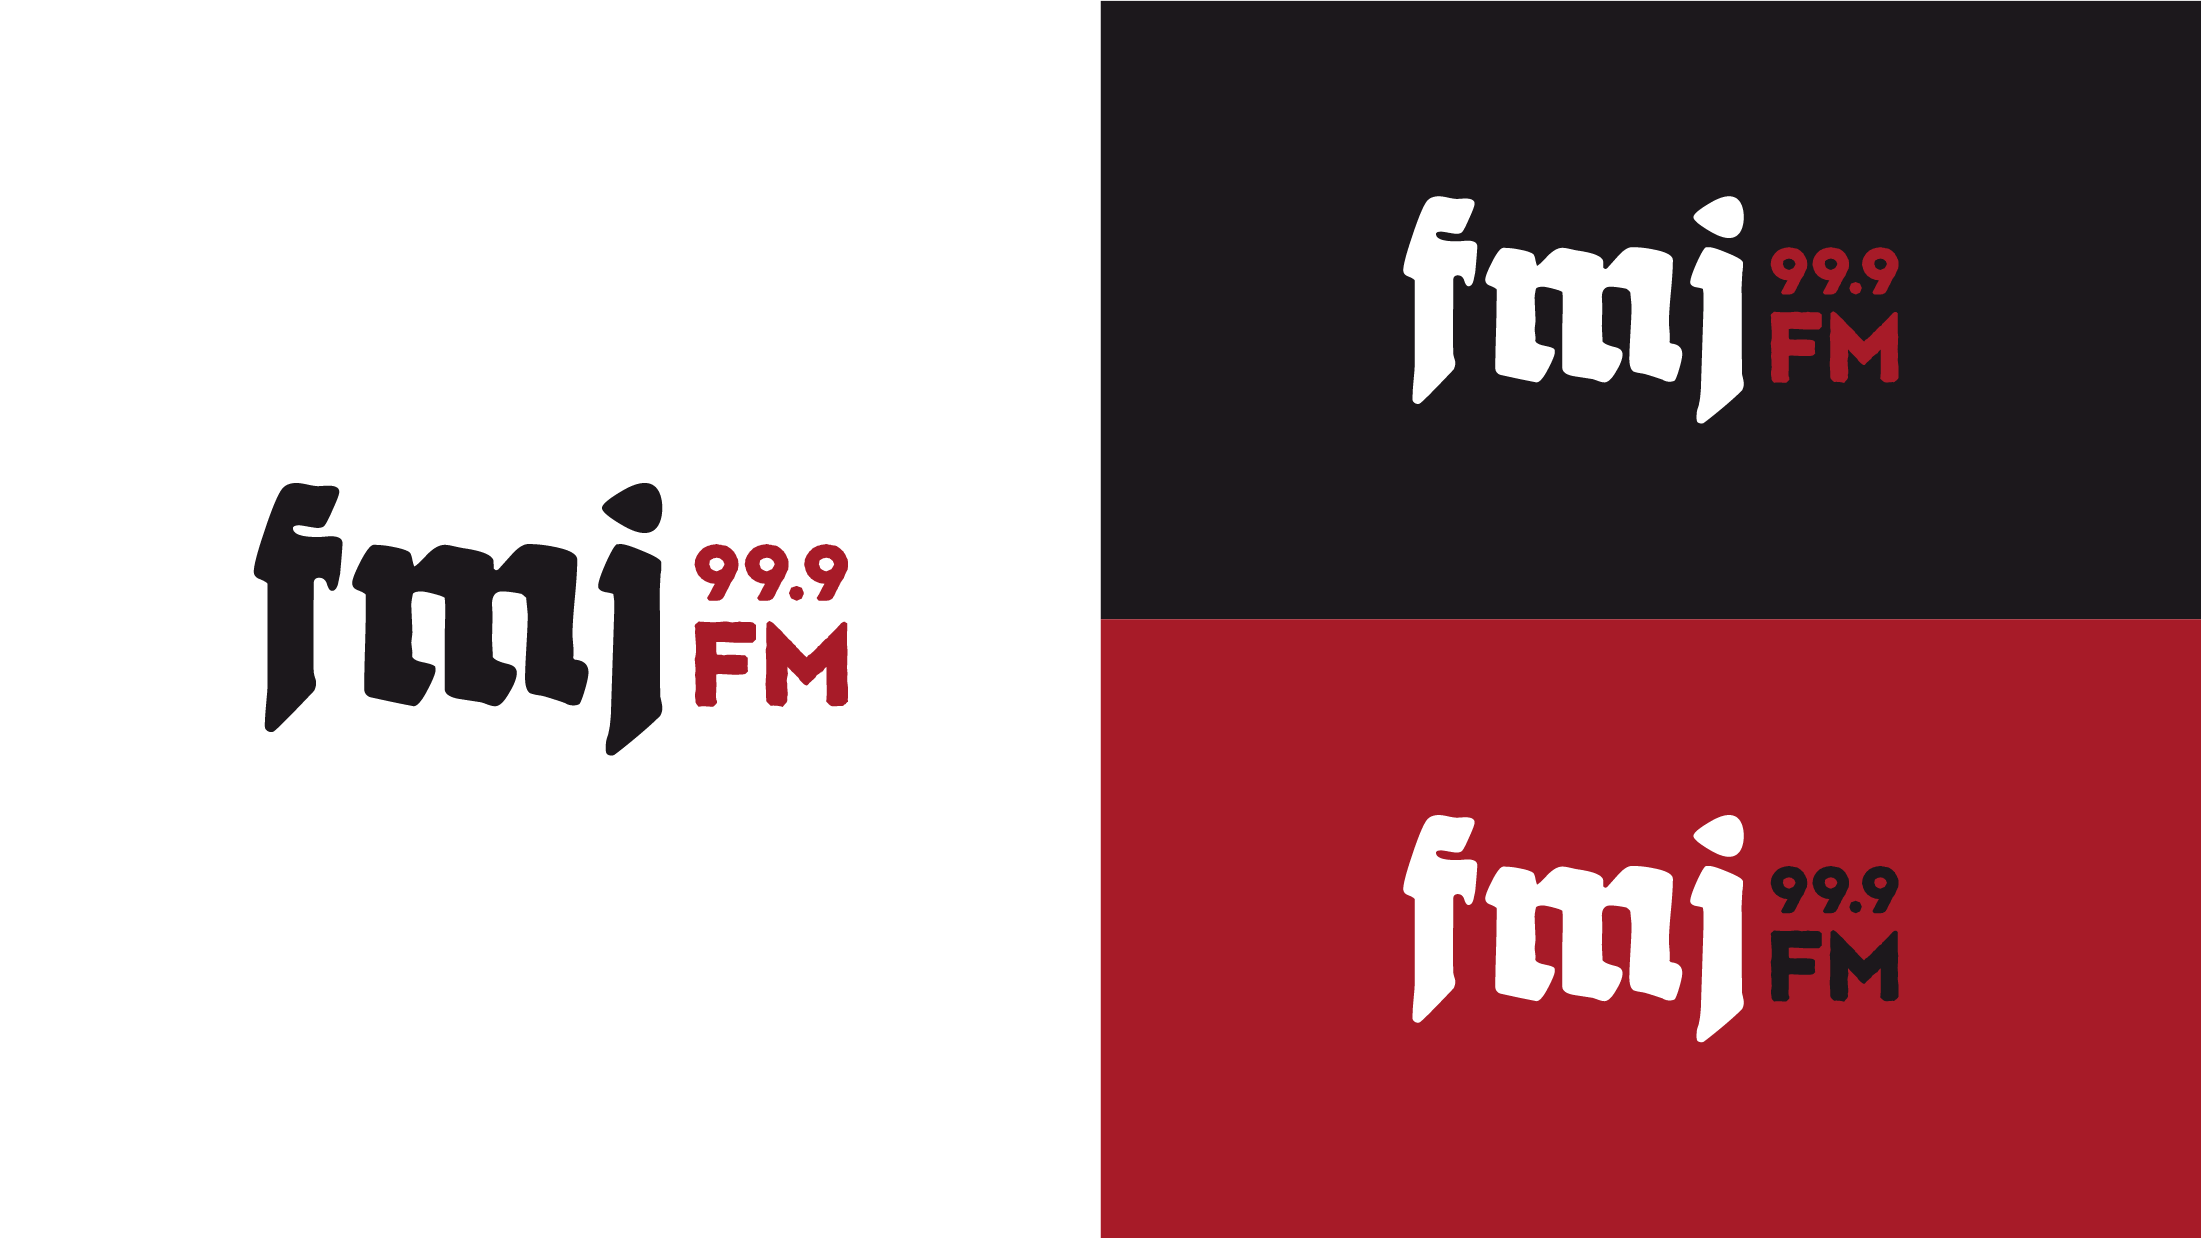 99.9 FMJ FM - Radio Station Branding 2